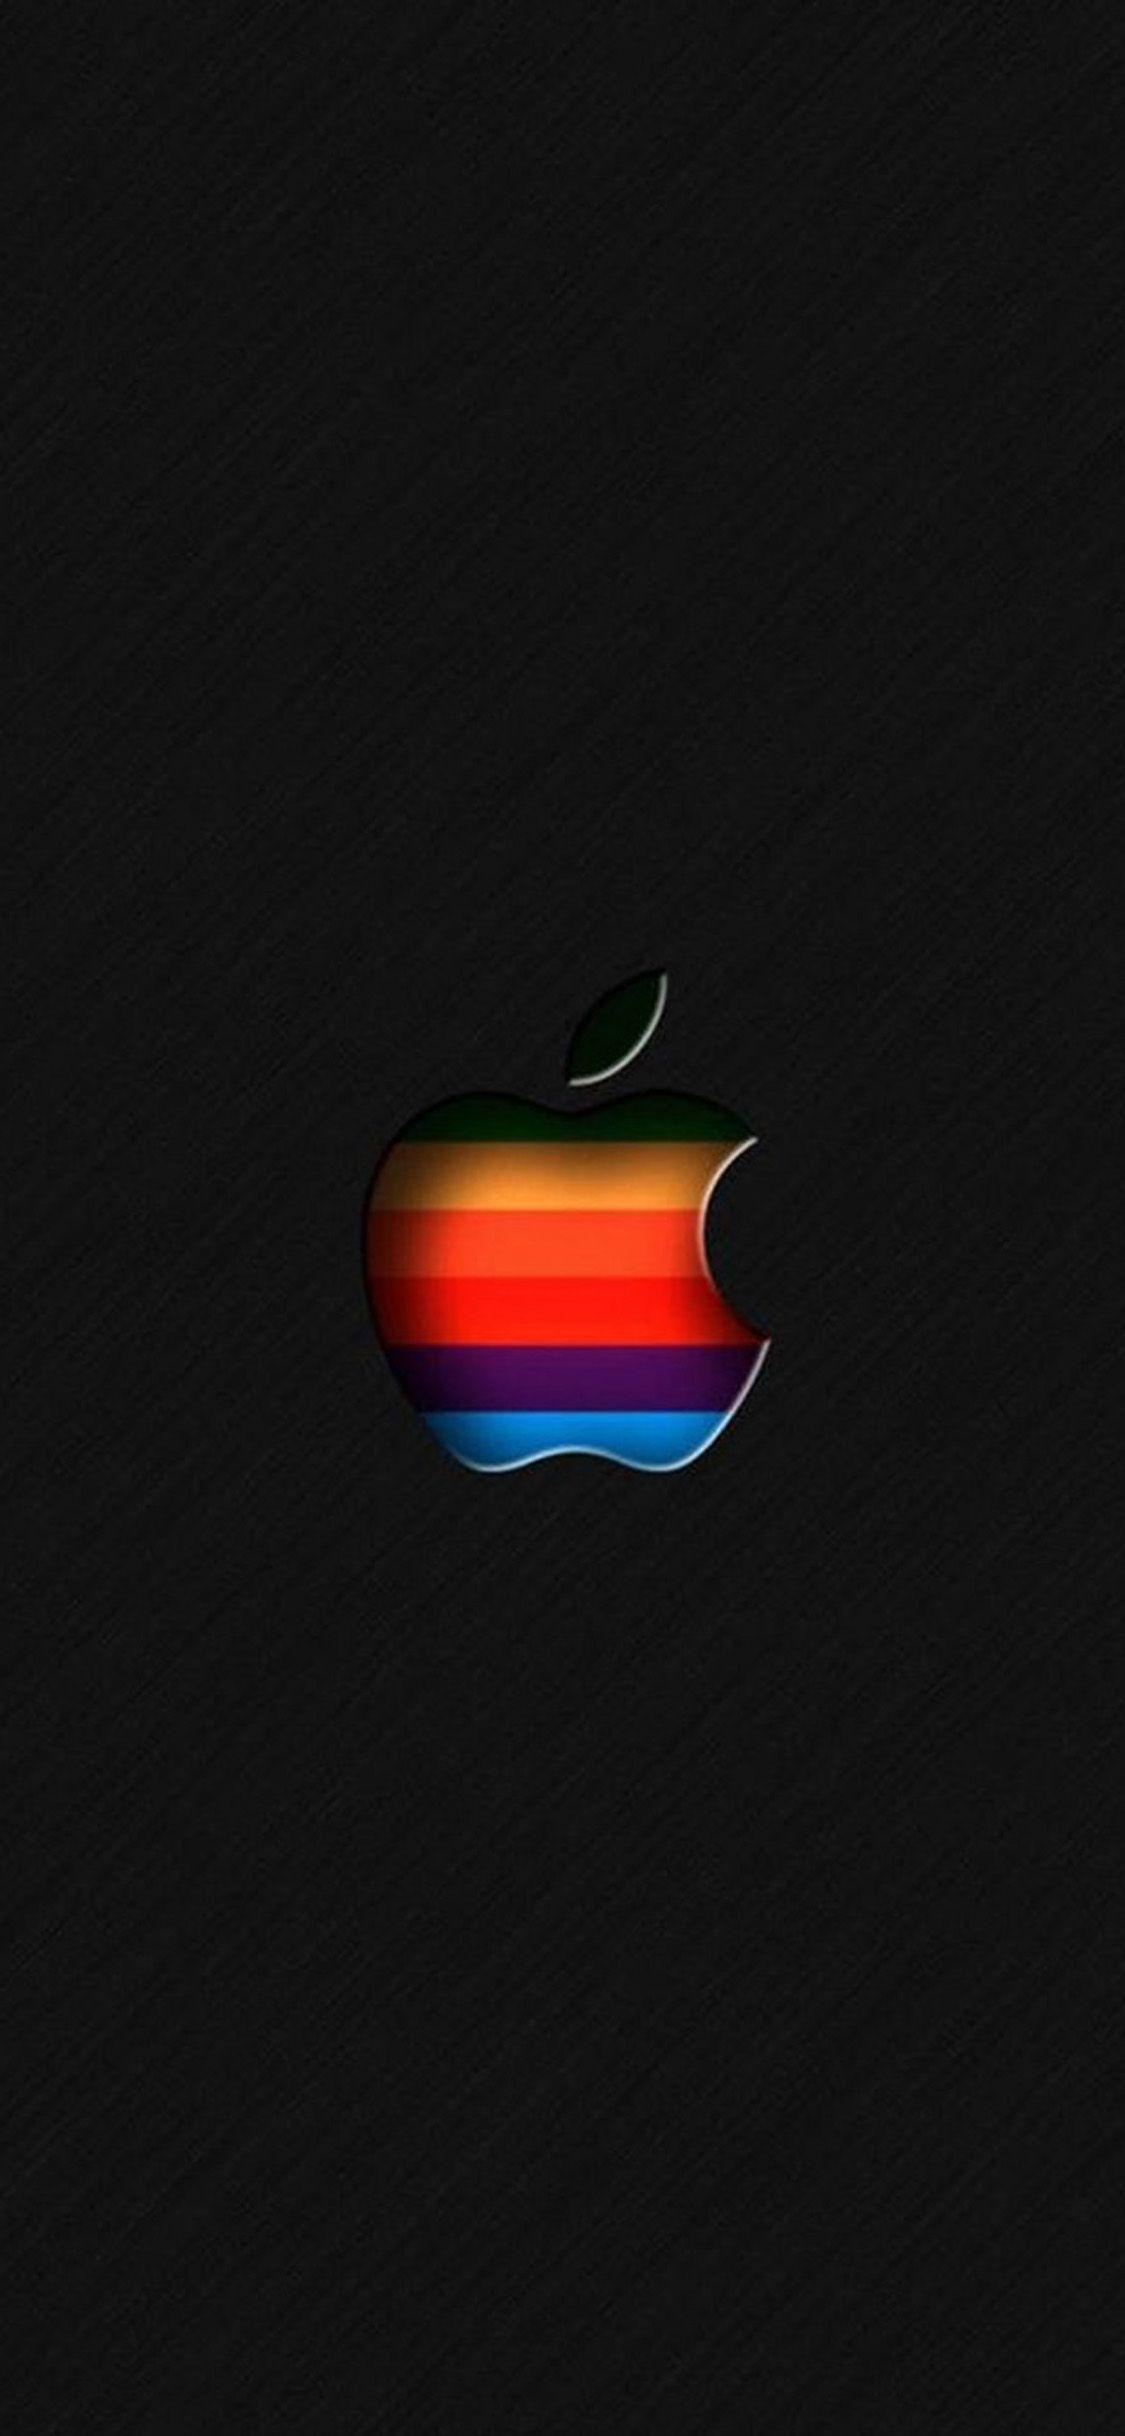 Apple Logo (157) IPhone X Wallpaper HDiPhoneWalls